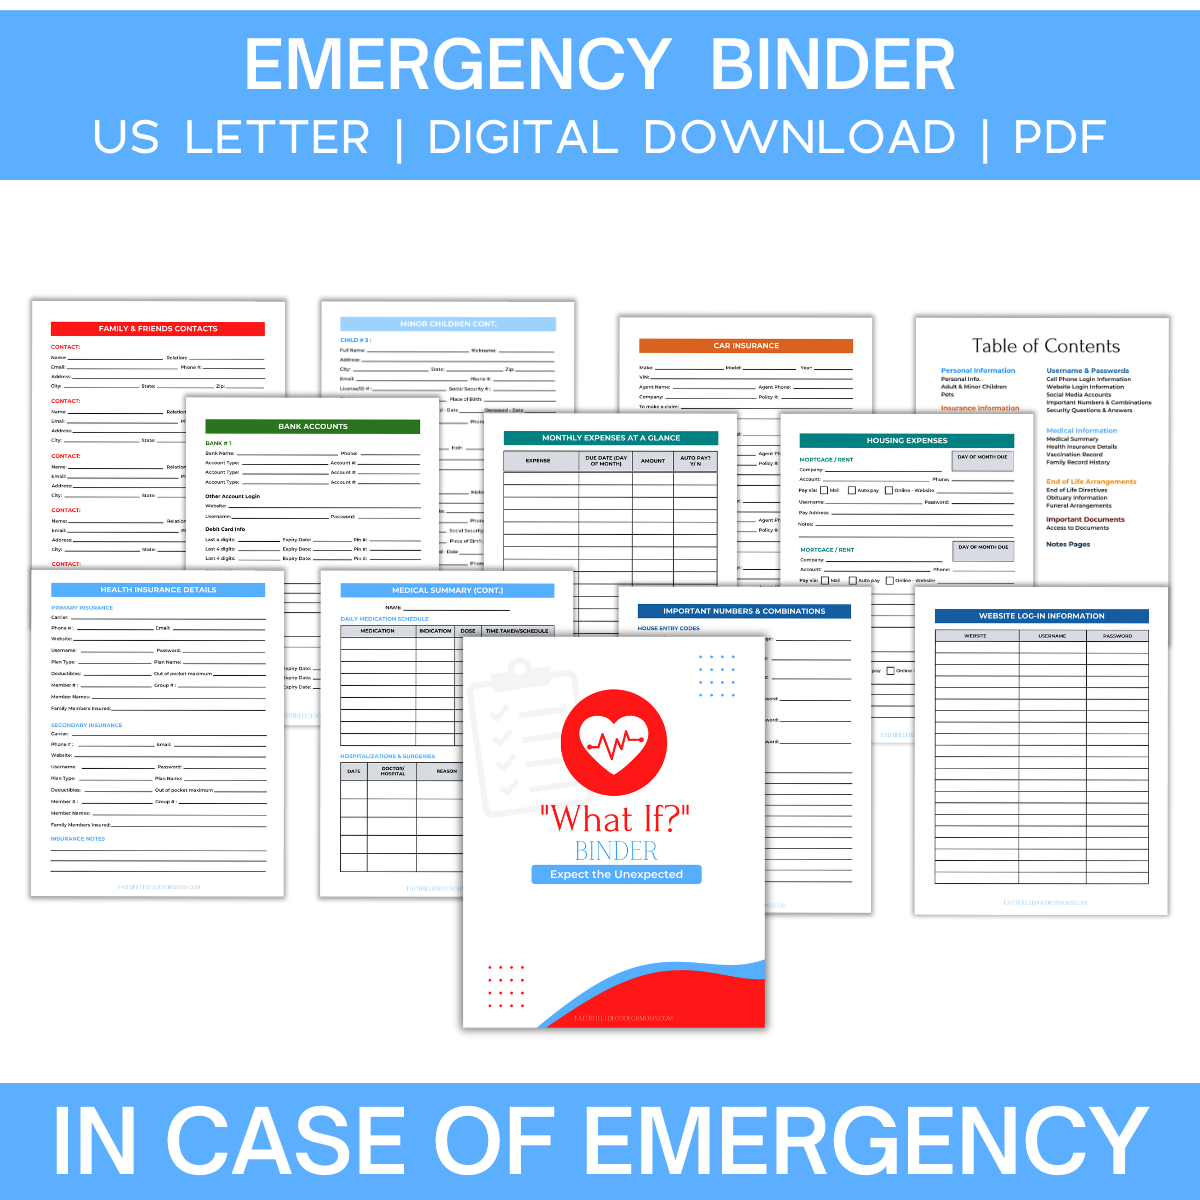 What If Emergency Binder